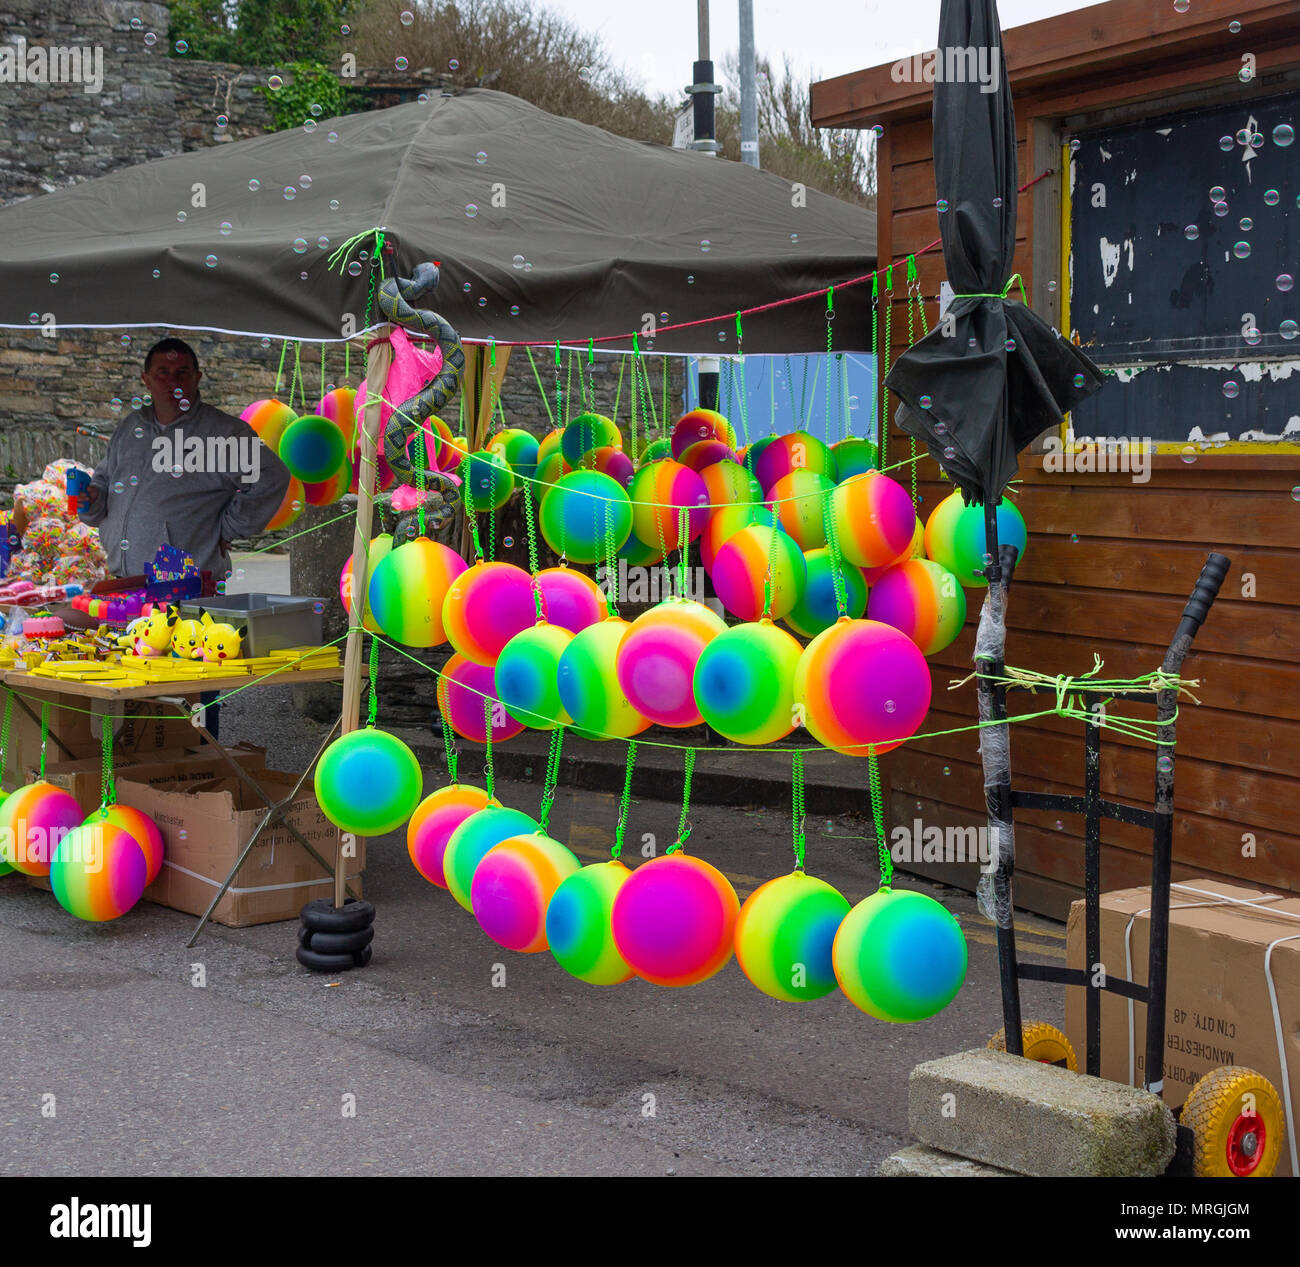 street vendor selling bright multicoloured balls at a festival Stock Photo